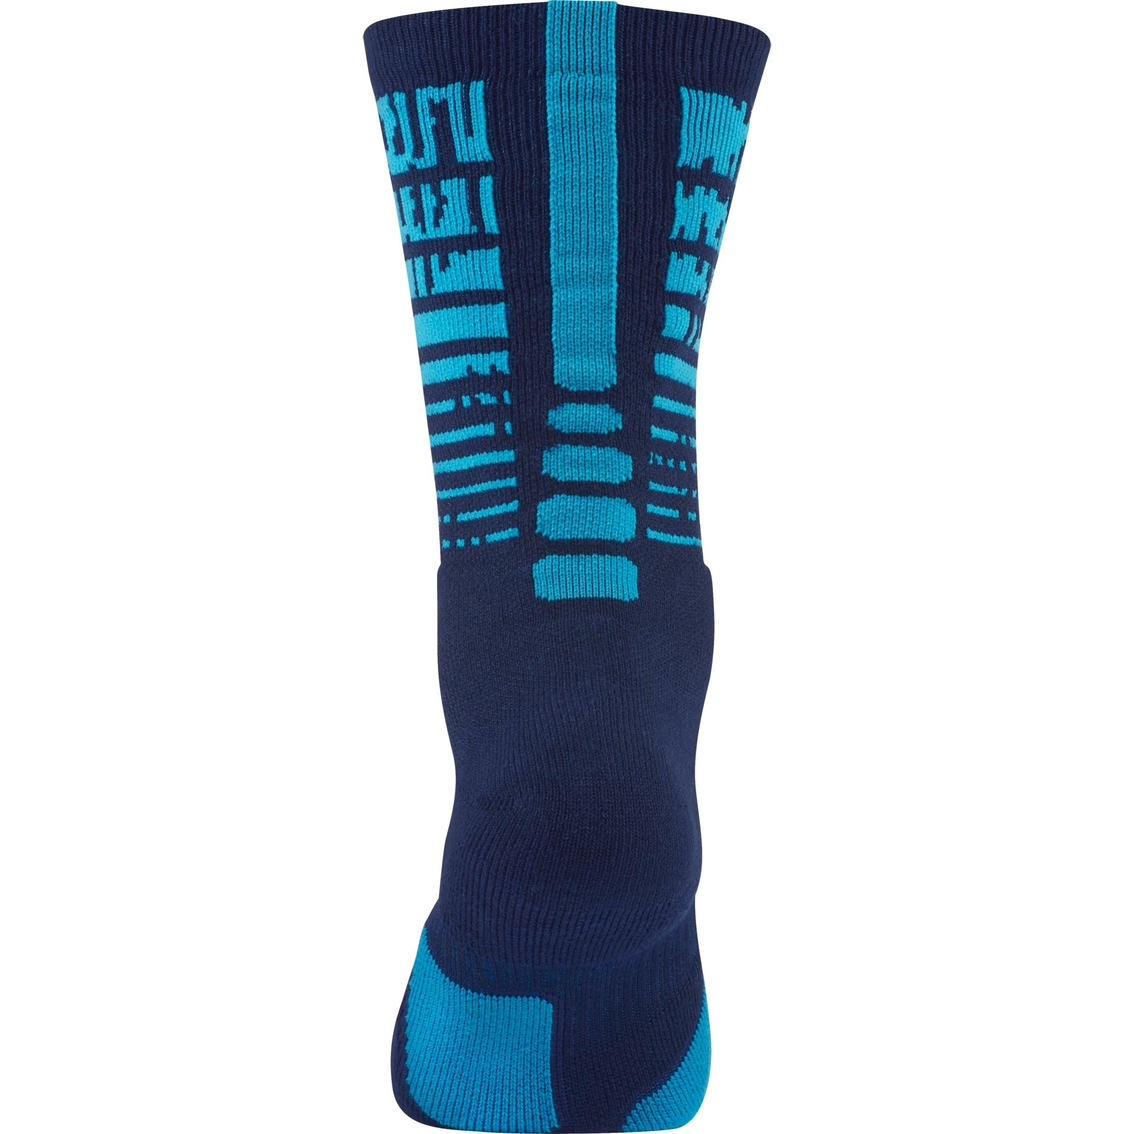 Nike Elite 1.5 Pulse Crew Basketball Socks - Image 3 of 3